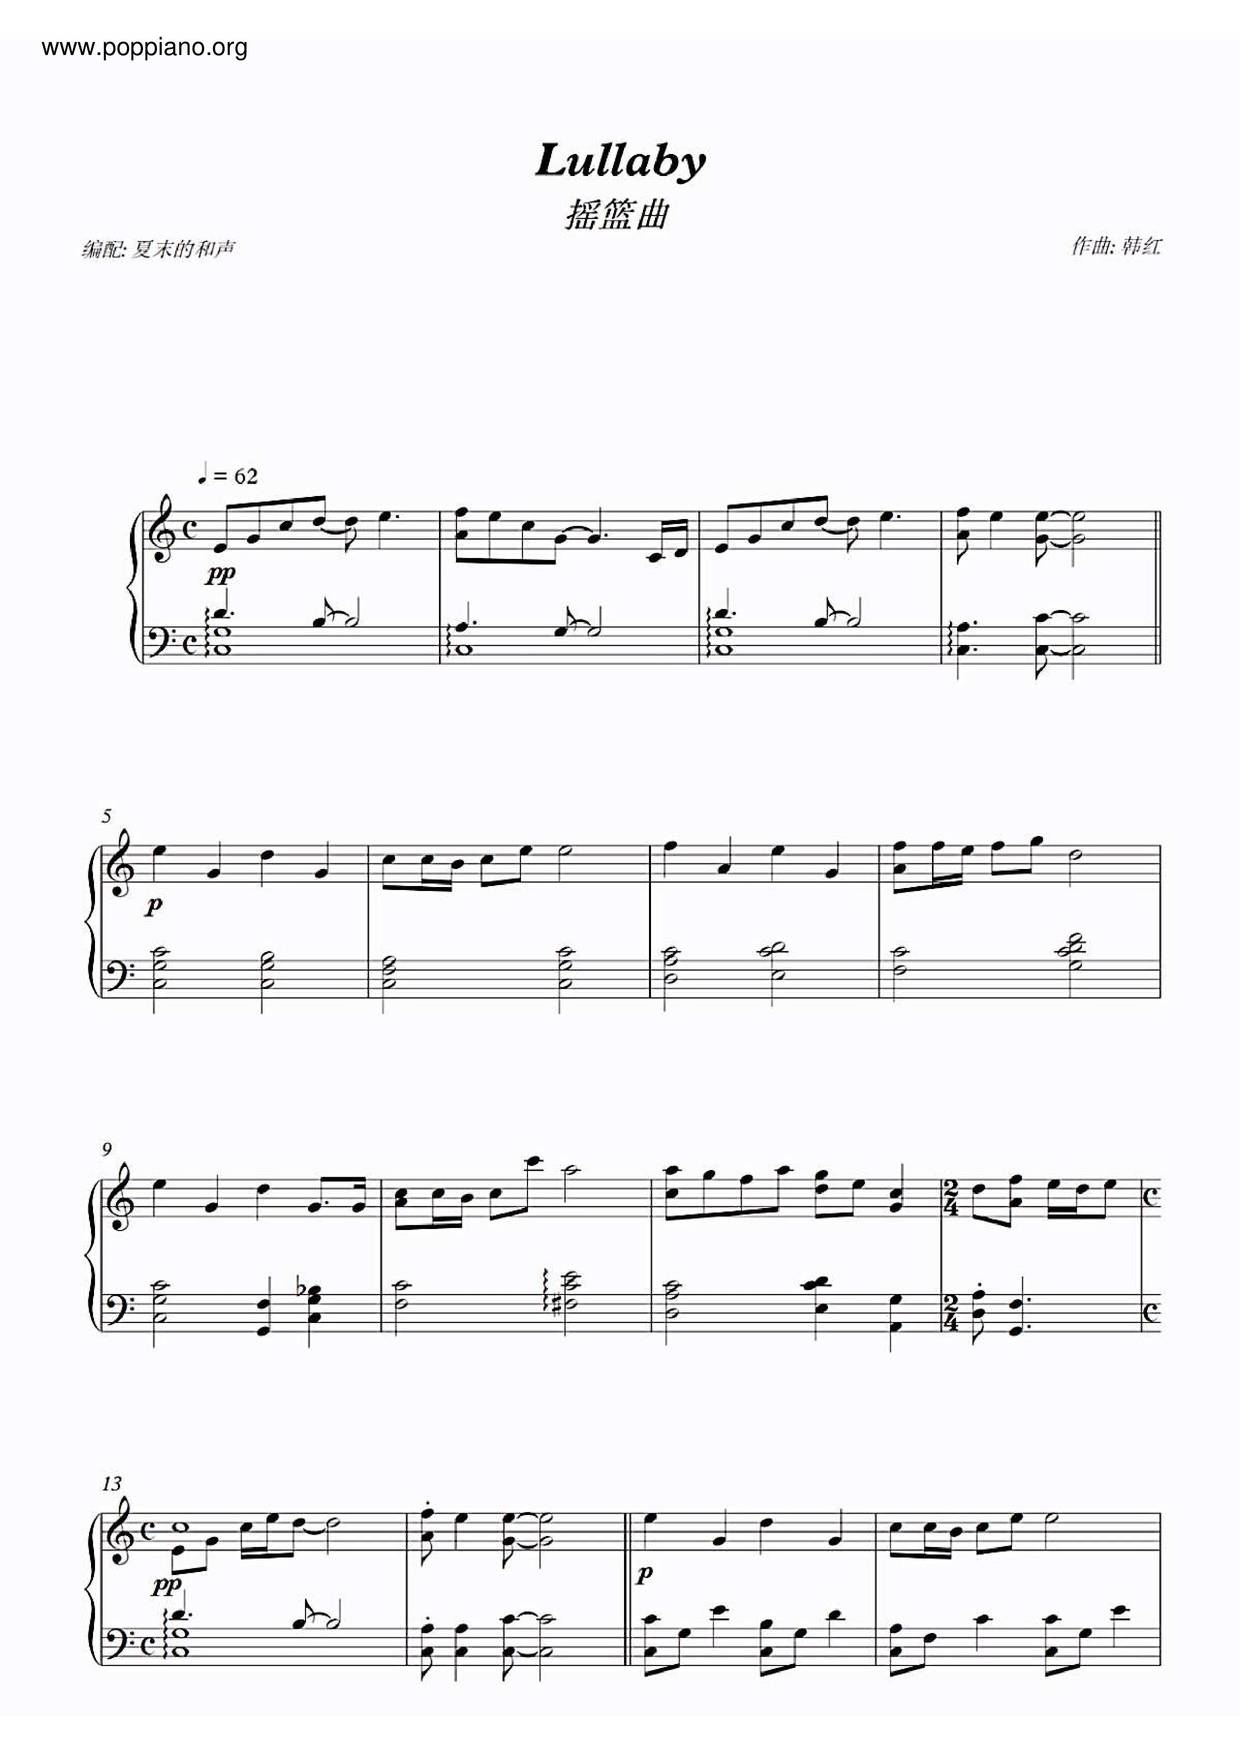 Lullaby Score